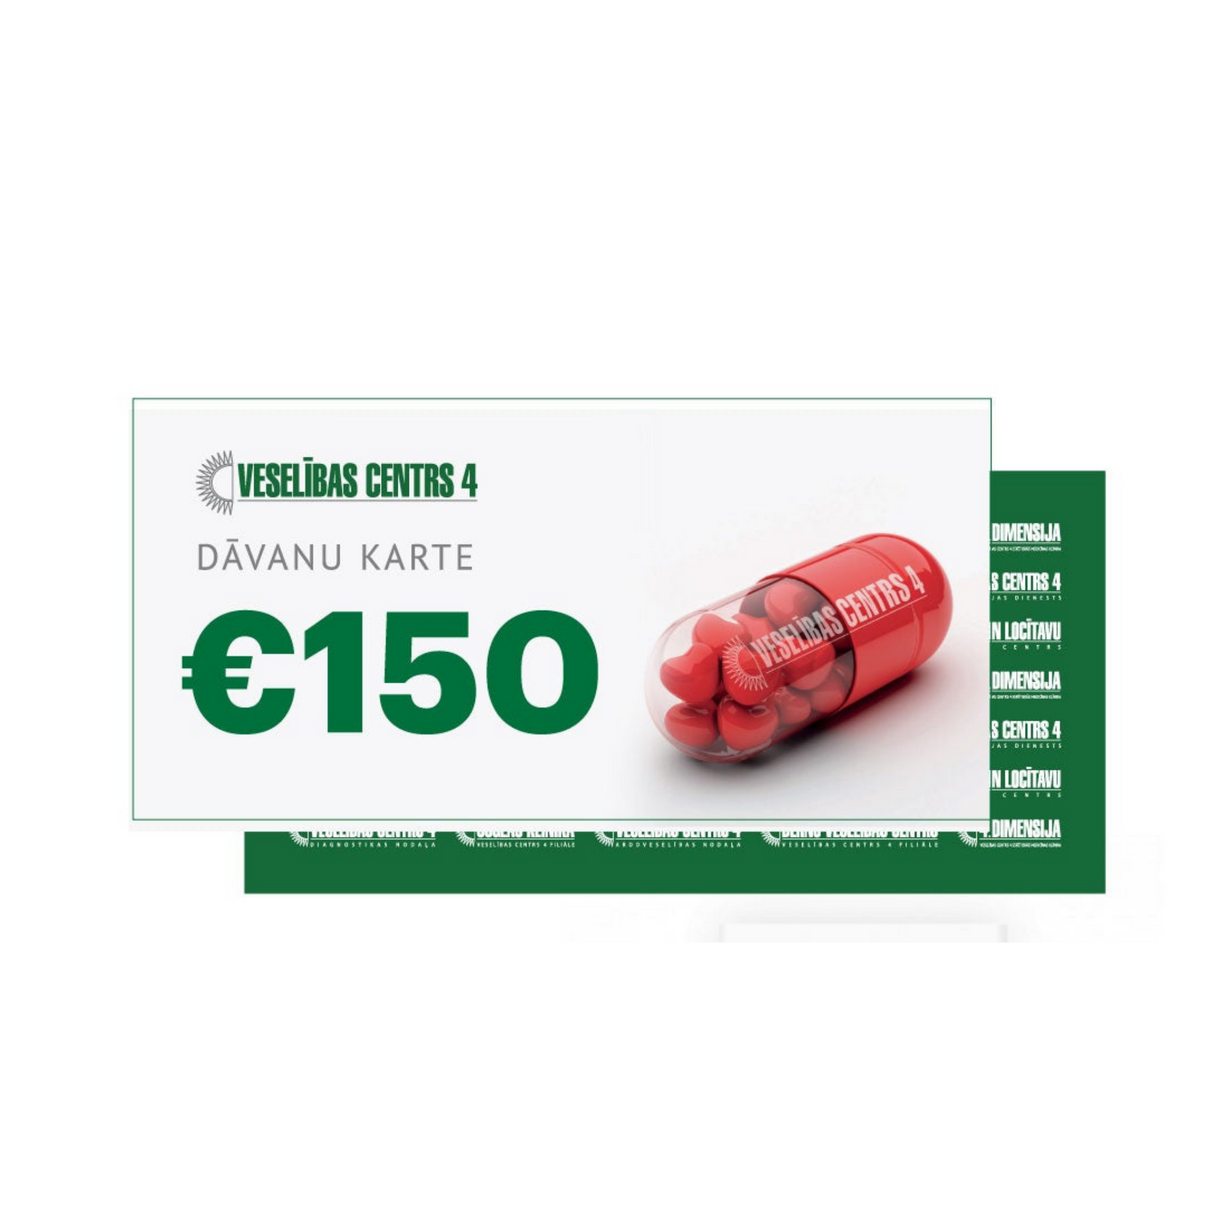 "Veselības centrs 4" Gift card worth 150 Eur